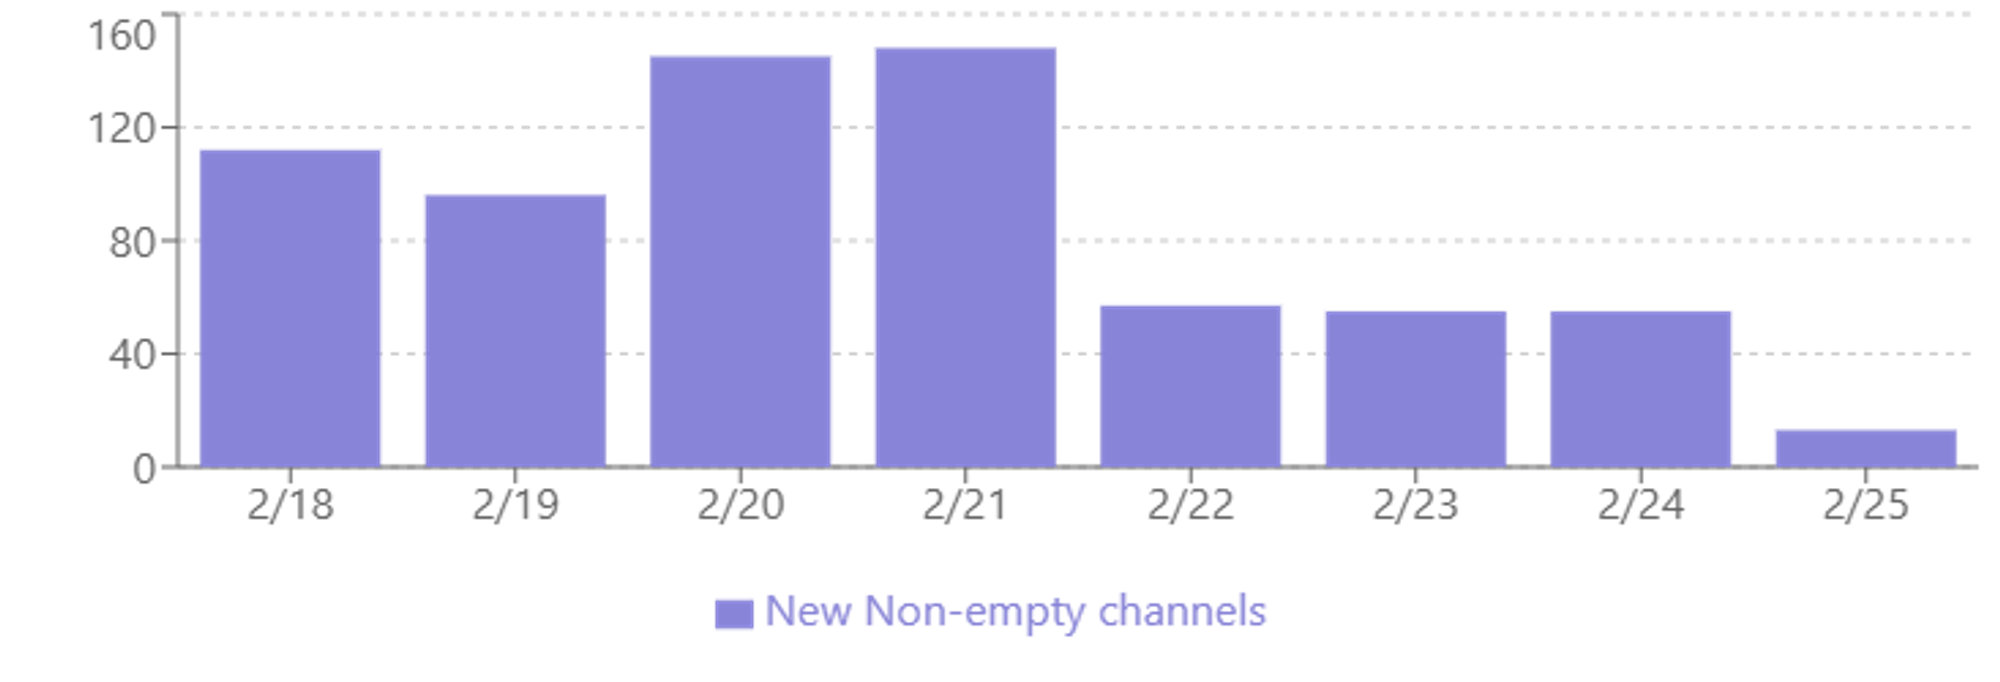 25 channels